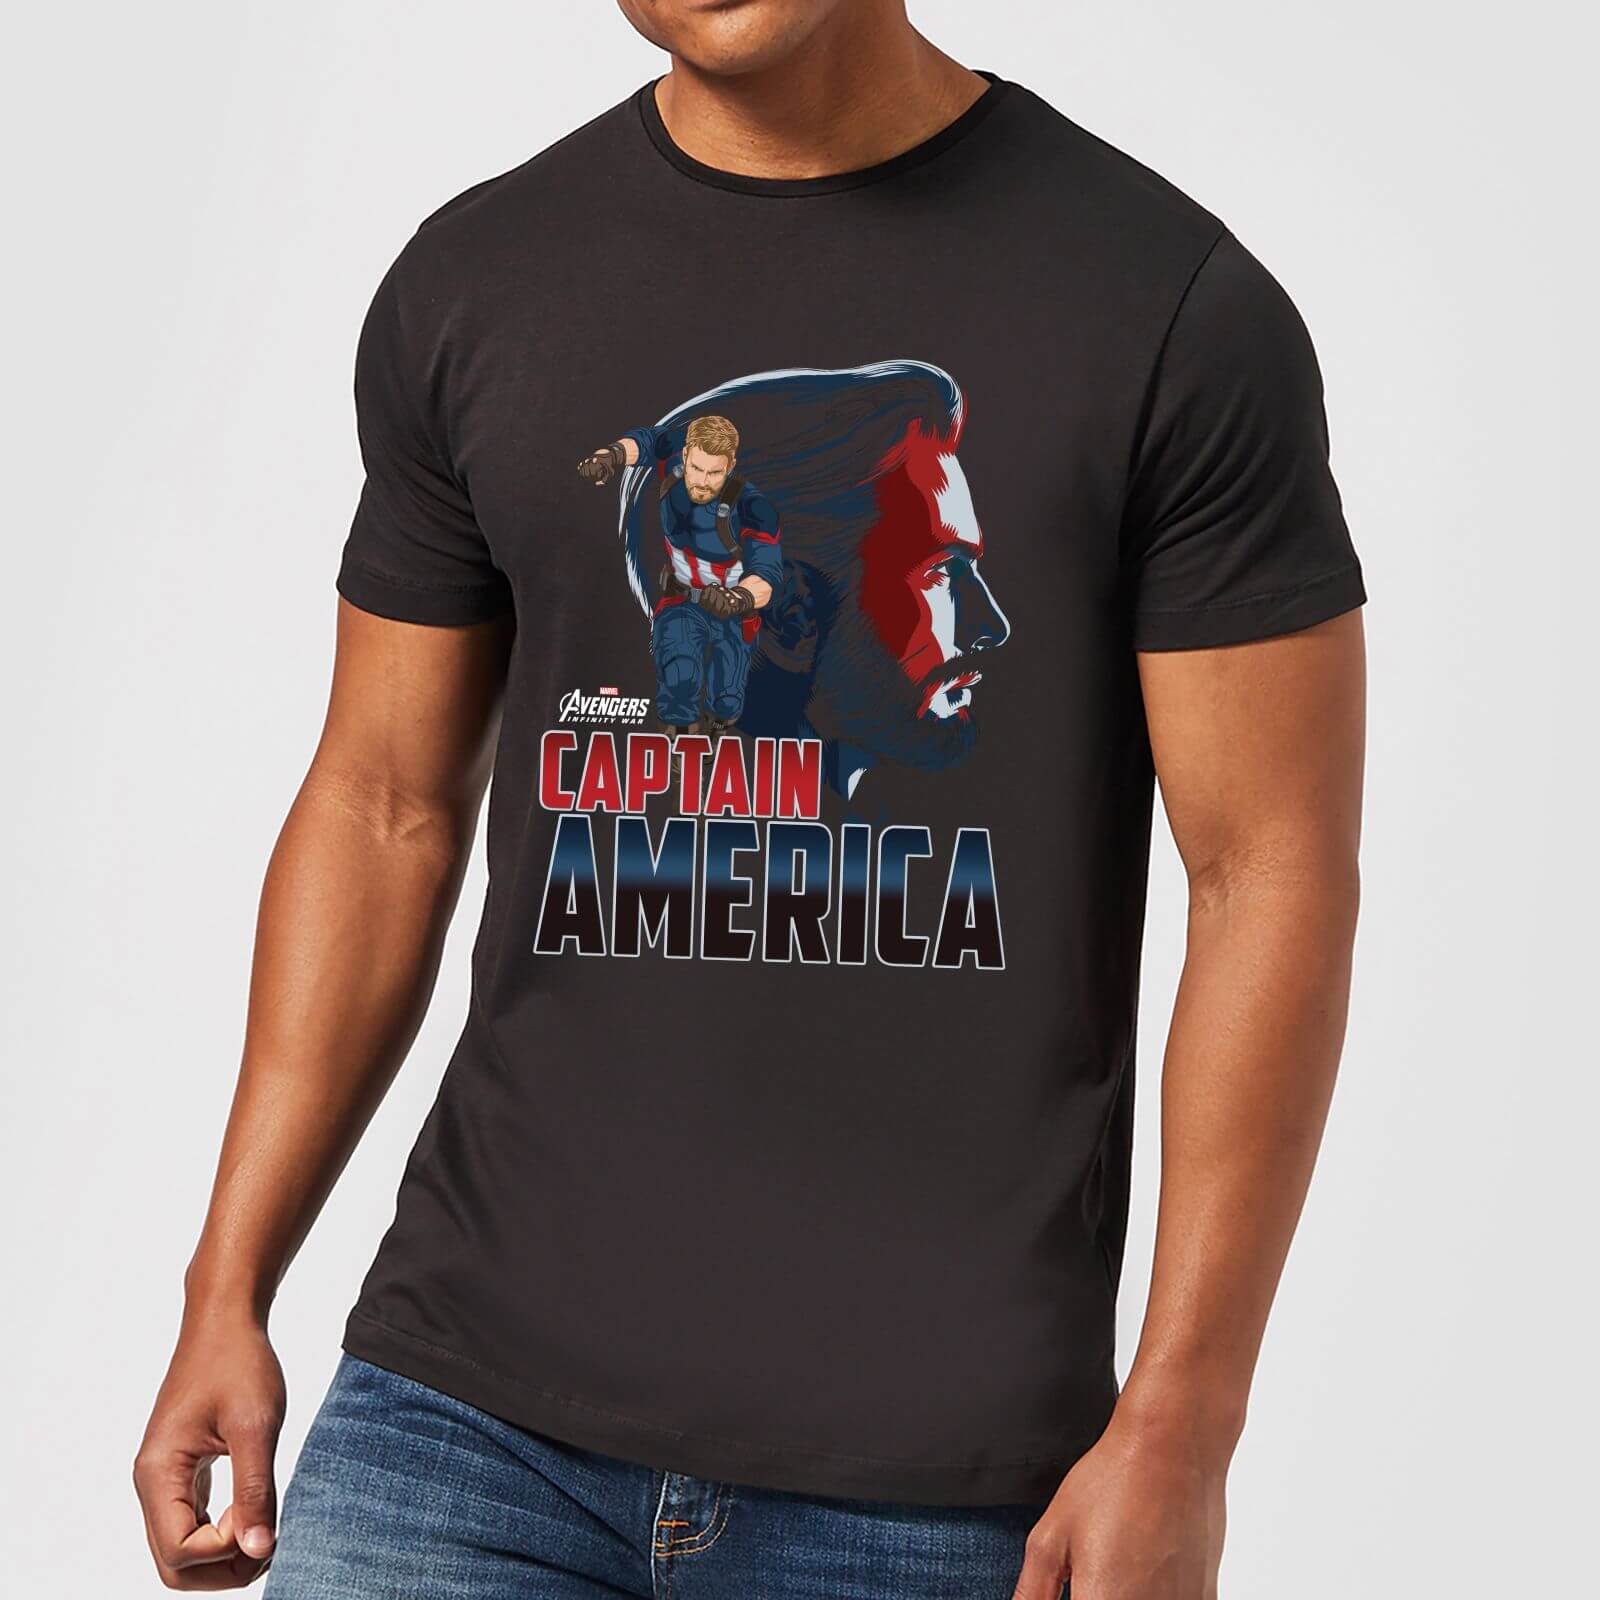 Avengers Captain America Herren T-Shirt - Schwarz - L